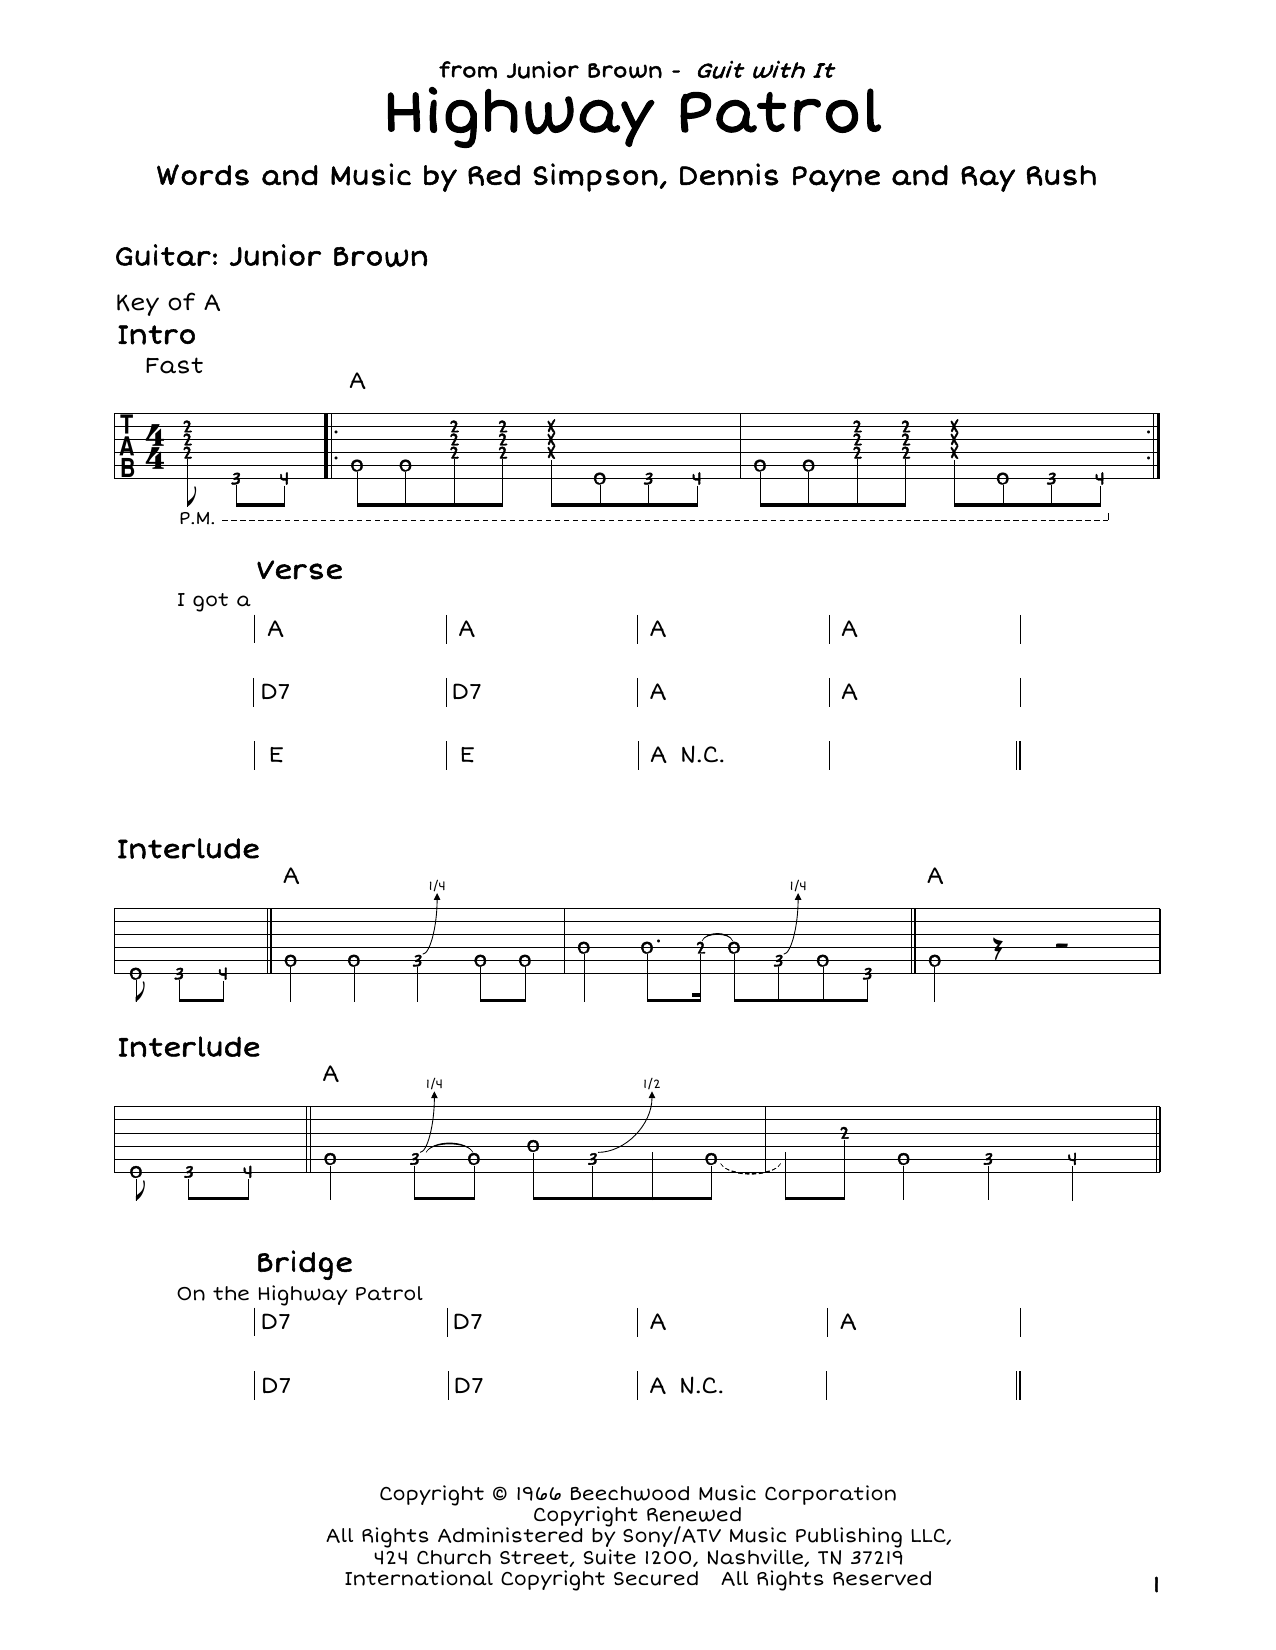 Ray Rush Highway Patrol Sheet Music Notes & Chords for Guitar Tab - Download or Print PDF